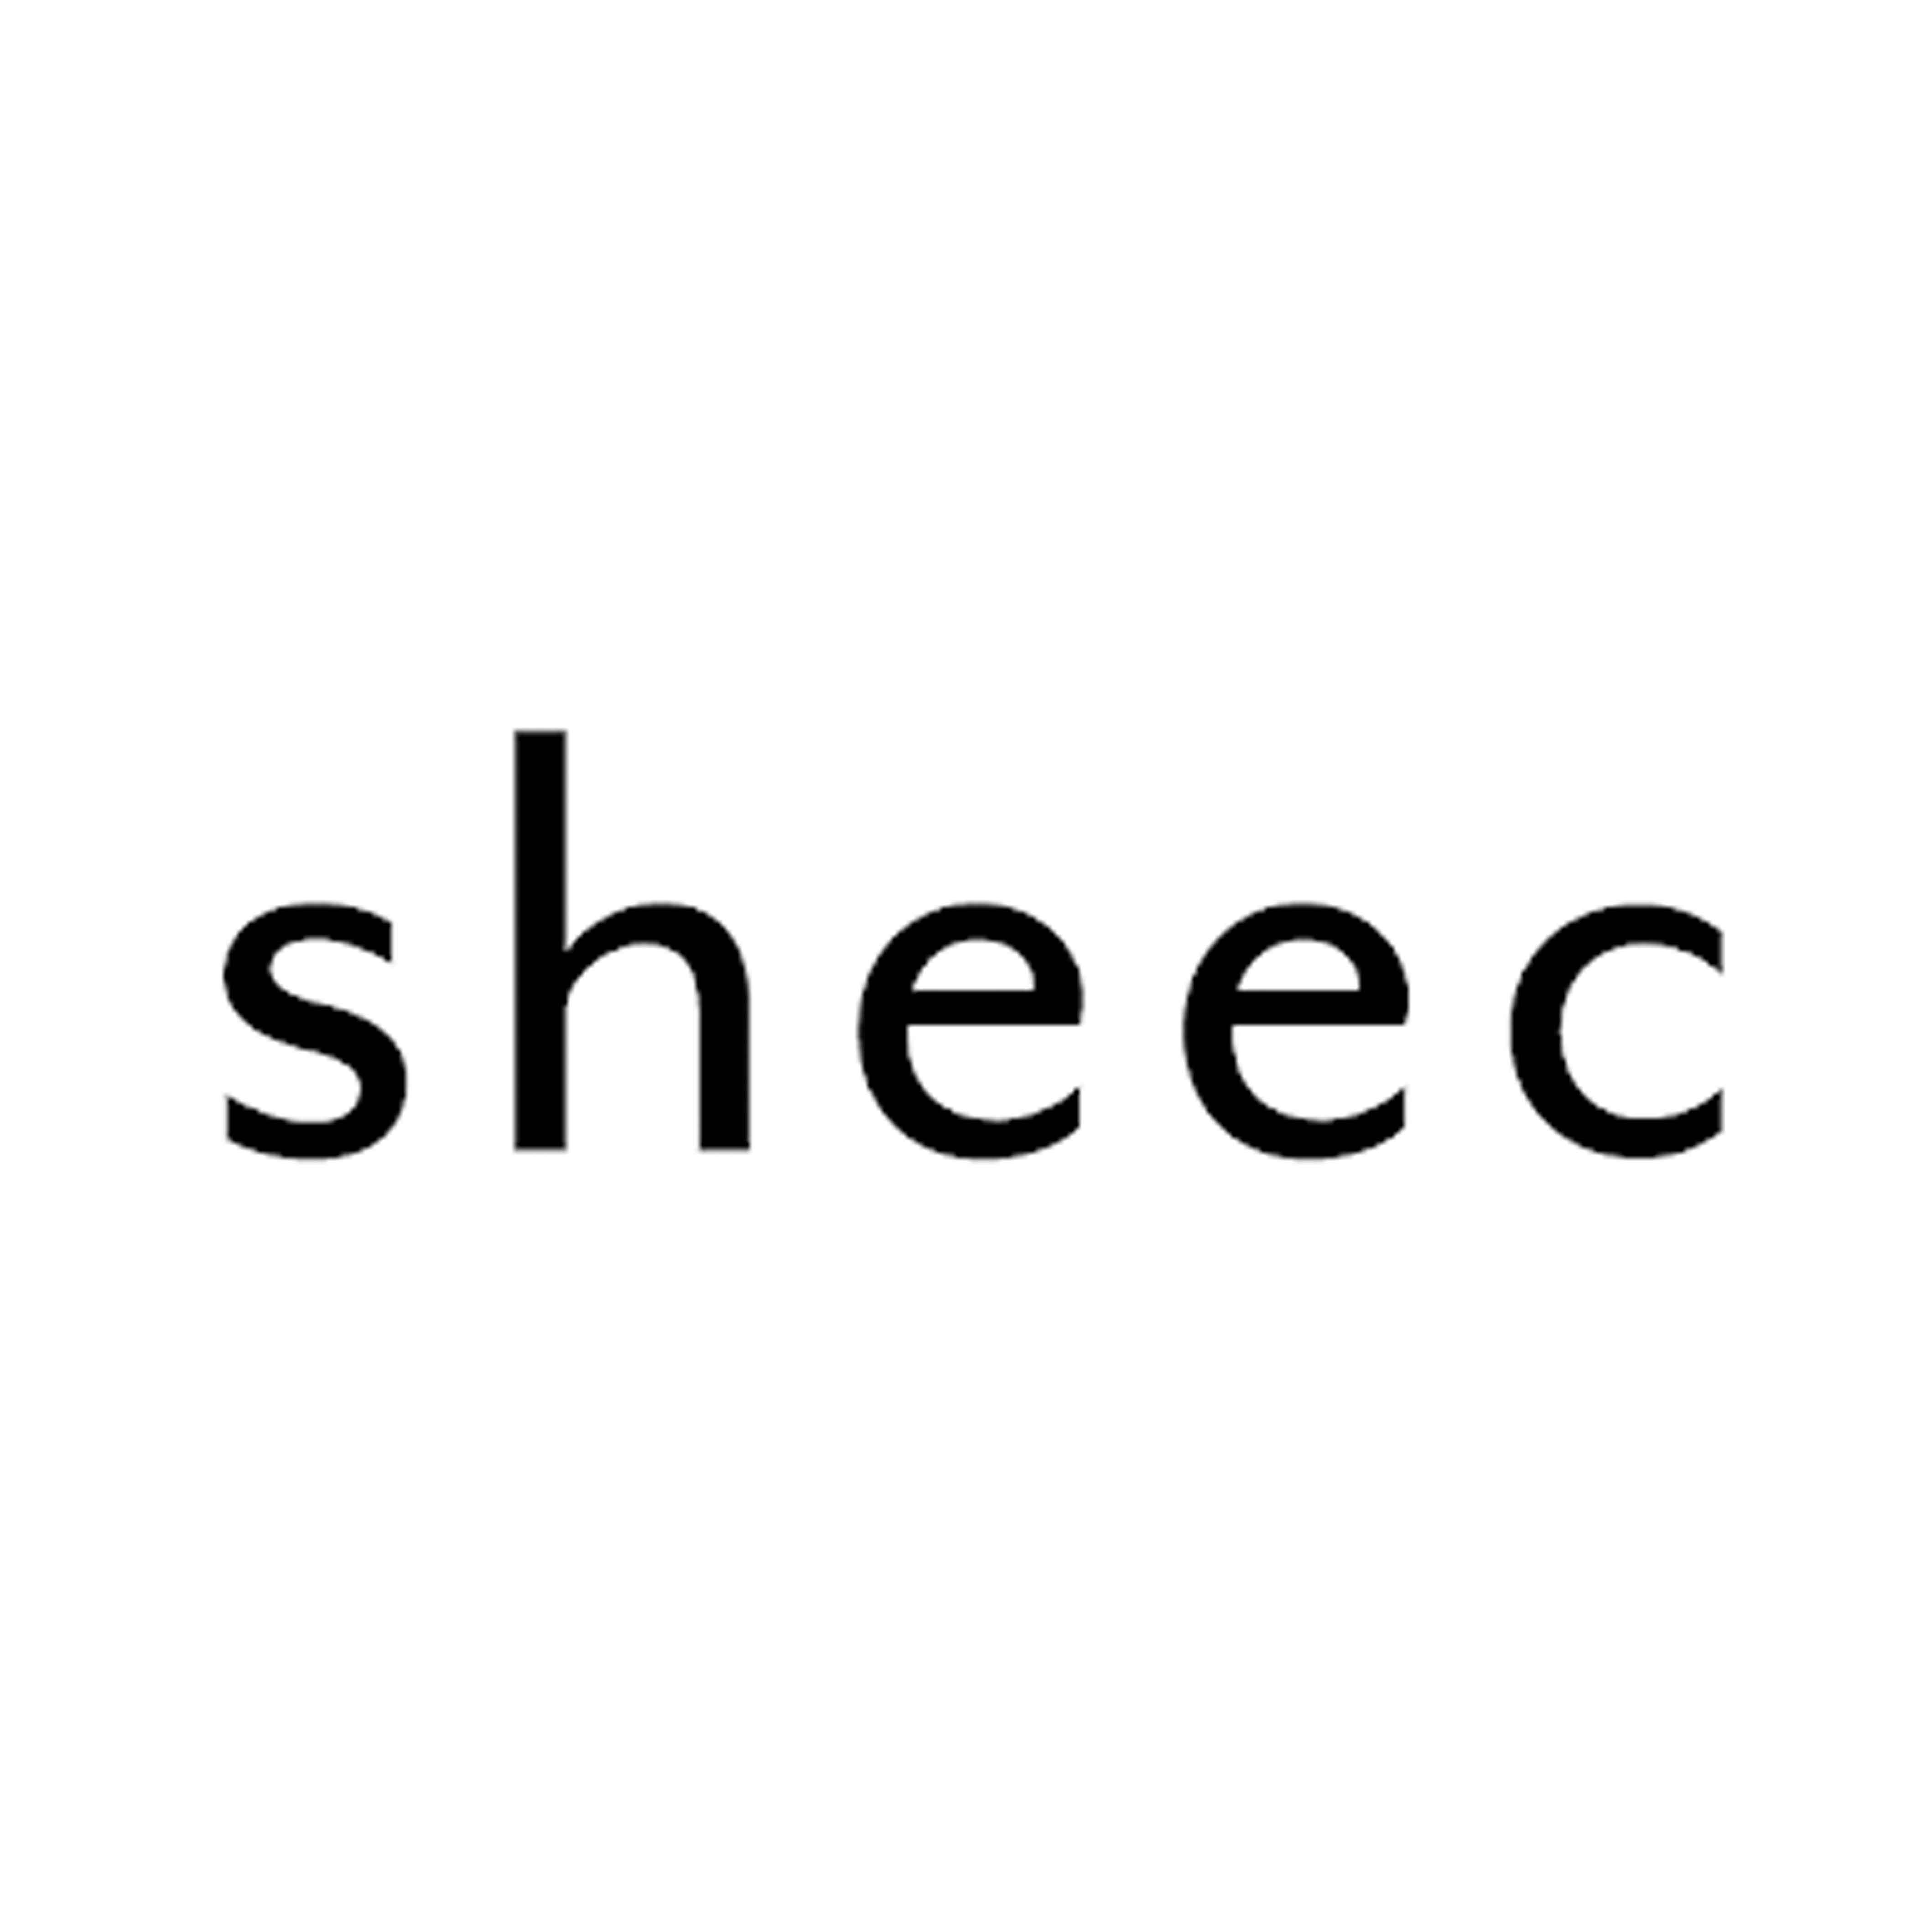 Sheec promo codes